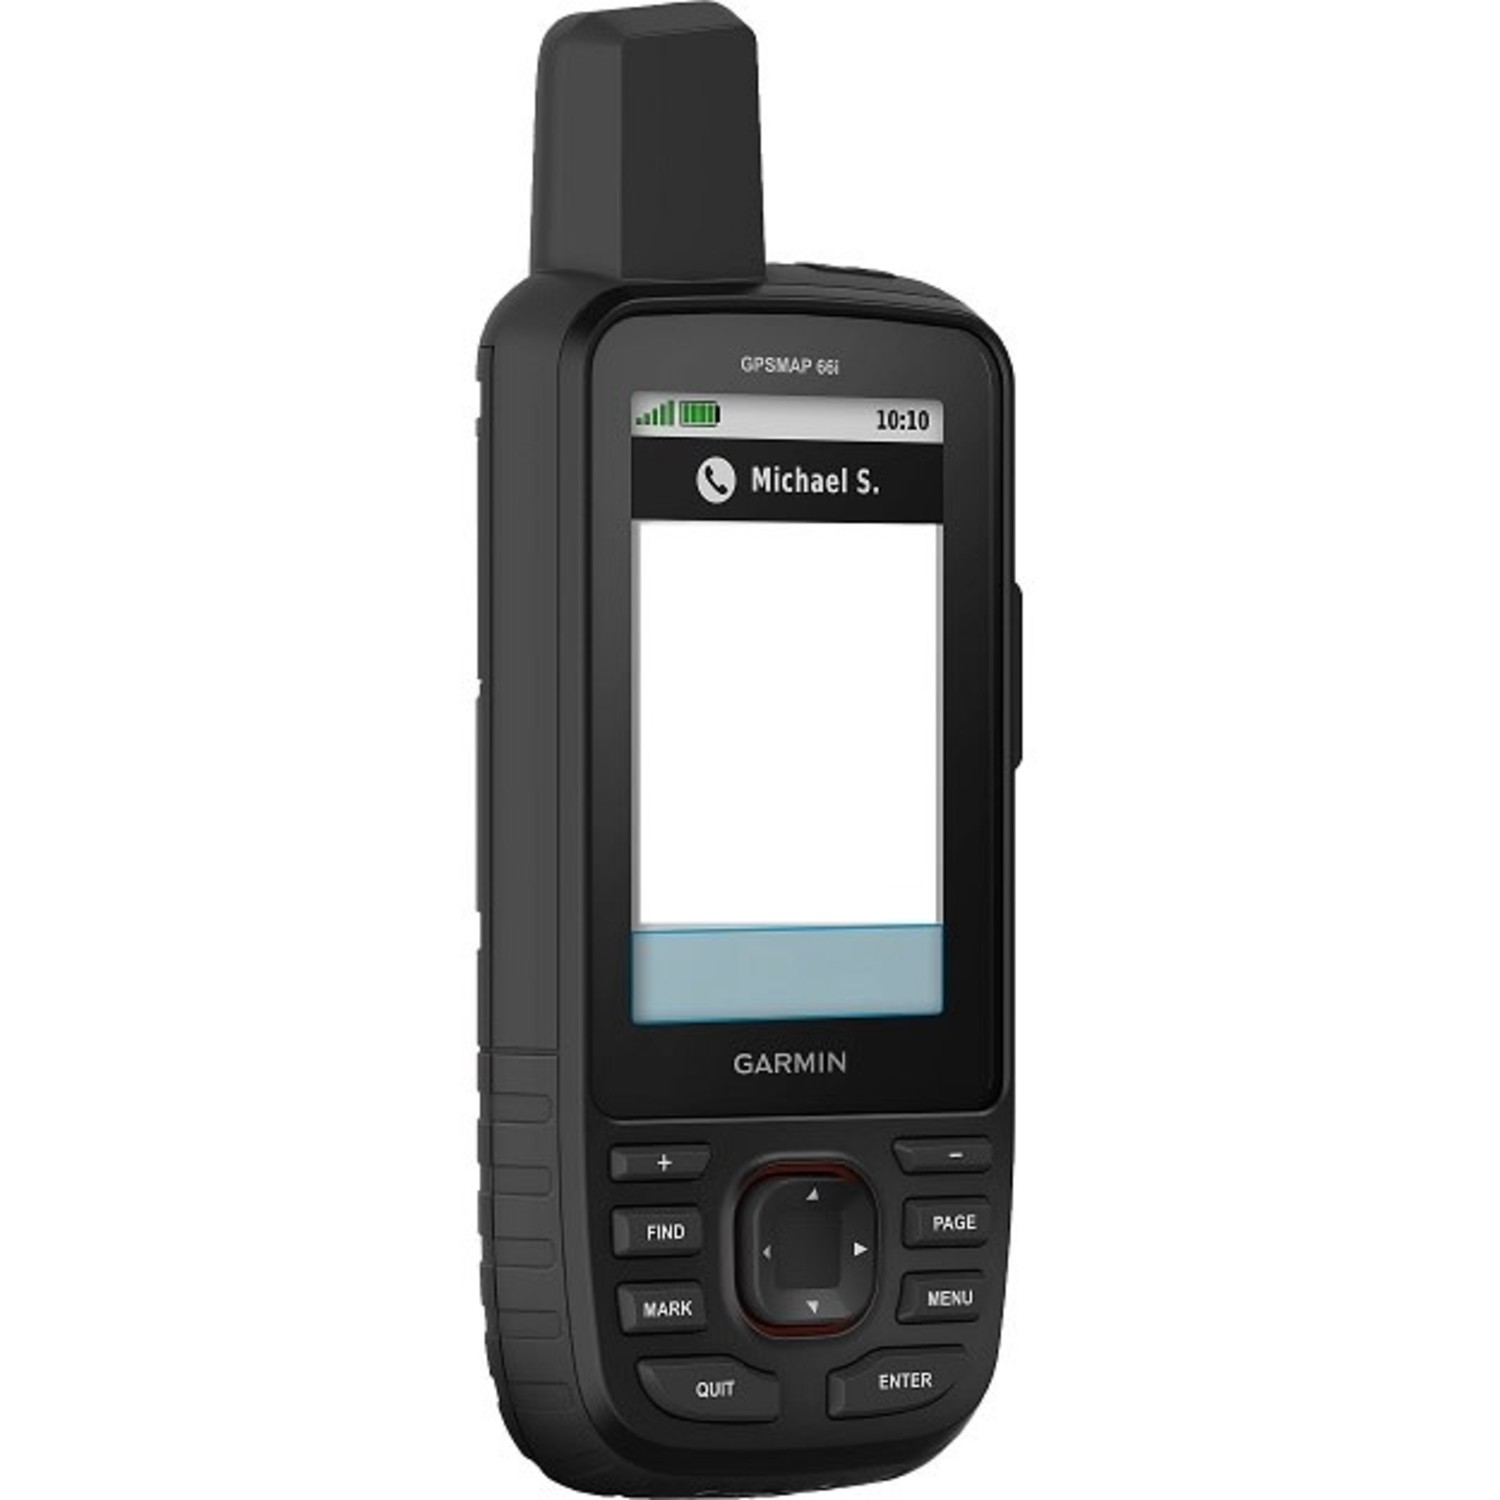 Garmin GPSMAP 66i GPS Handheld and Inreach Satellite Communicator